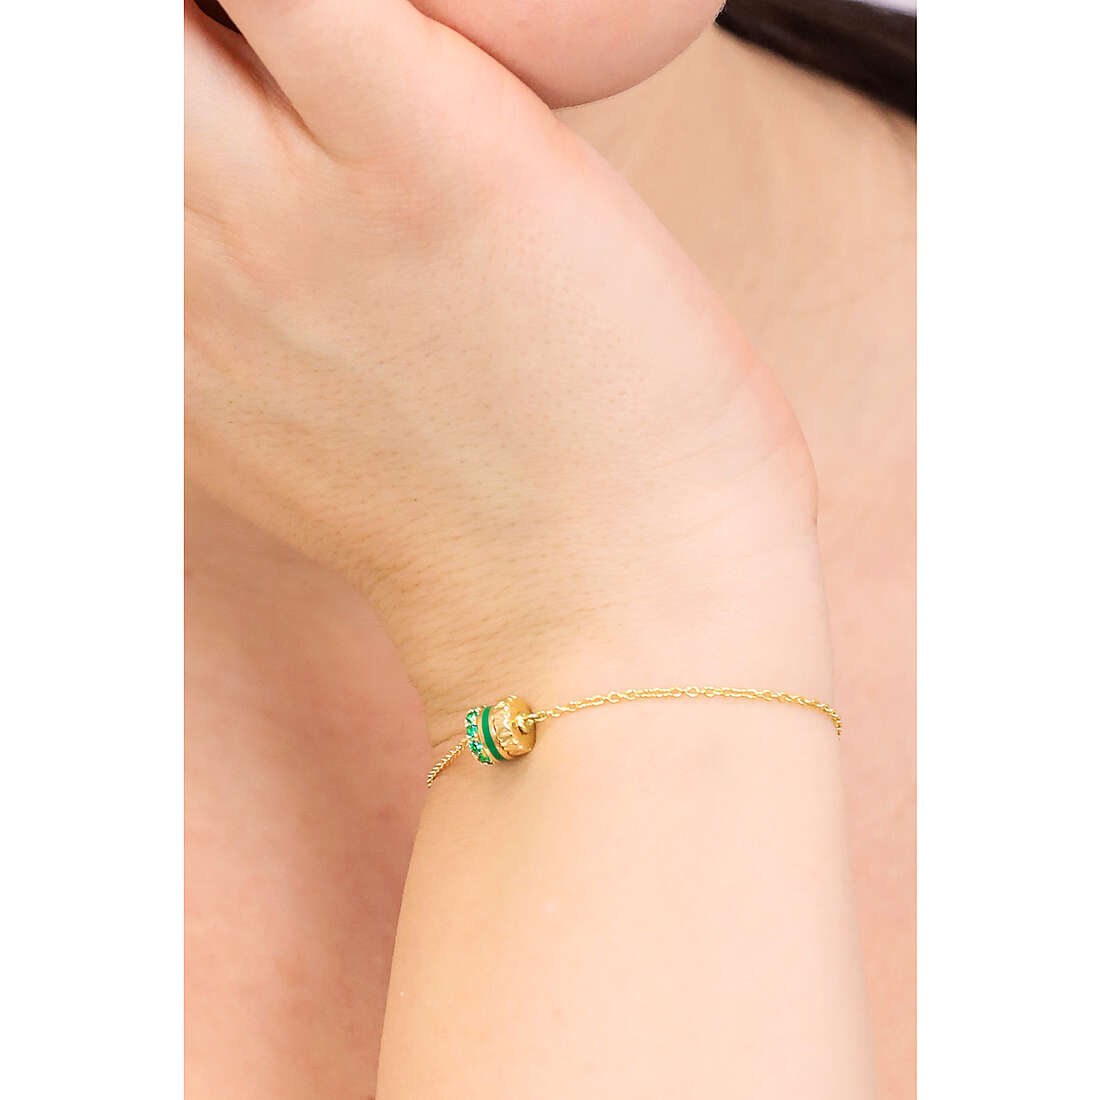 Michael Kors bracelets Kors Mk woman MKC1605BN710 wearing